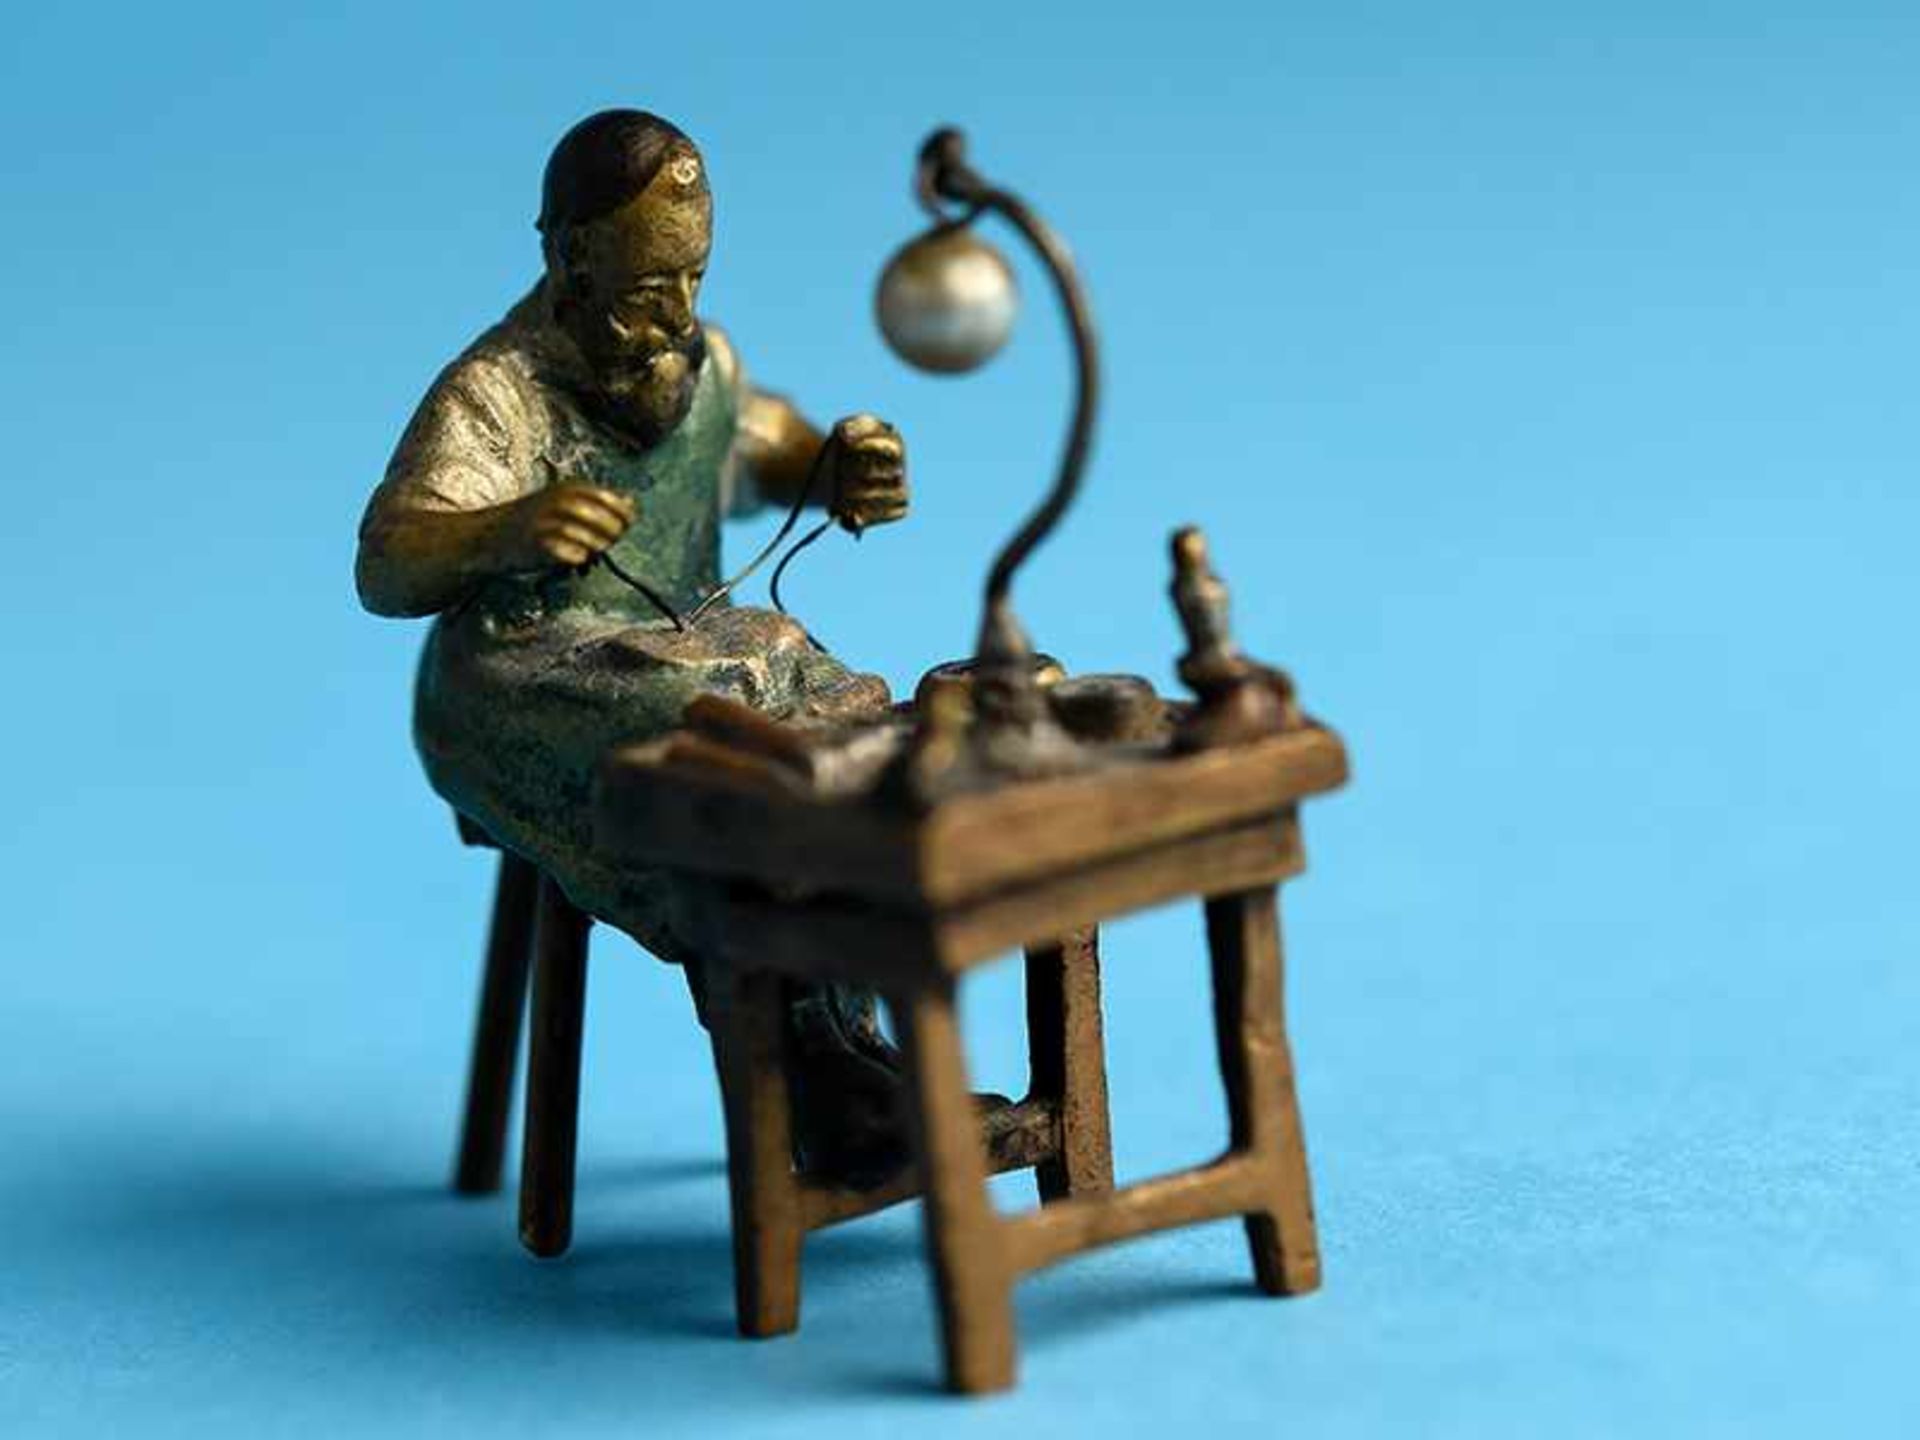 Miniatur-Figurengruppe "Schuster" in der Art der Wiener Bronzen; Anfang 20. Jh. Metallguß, gold- und